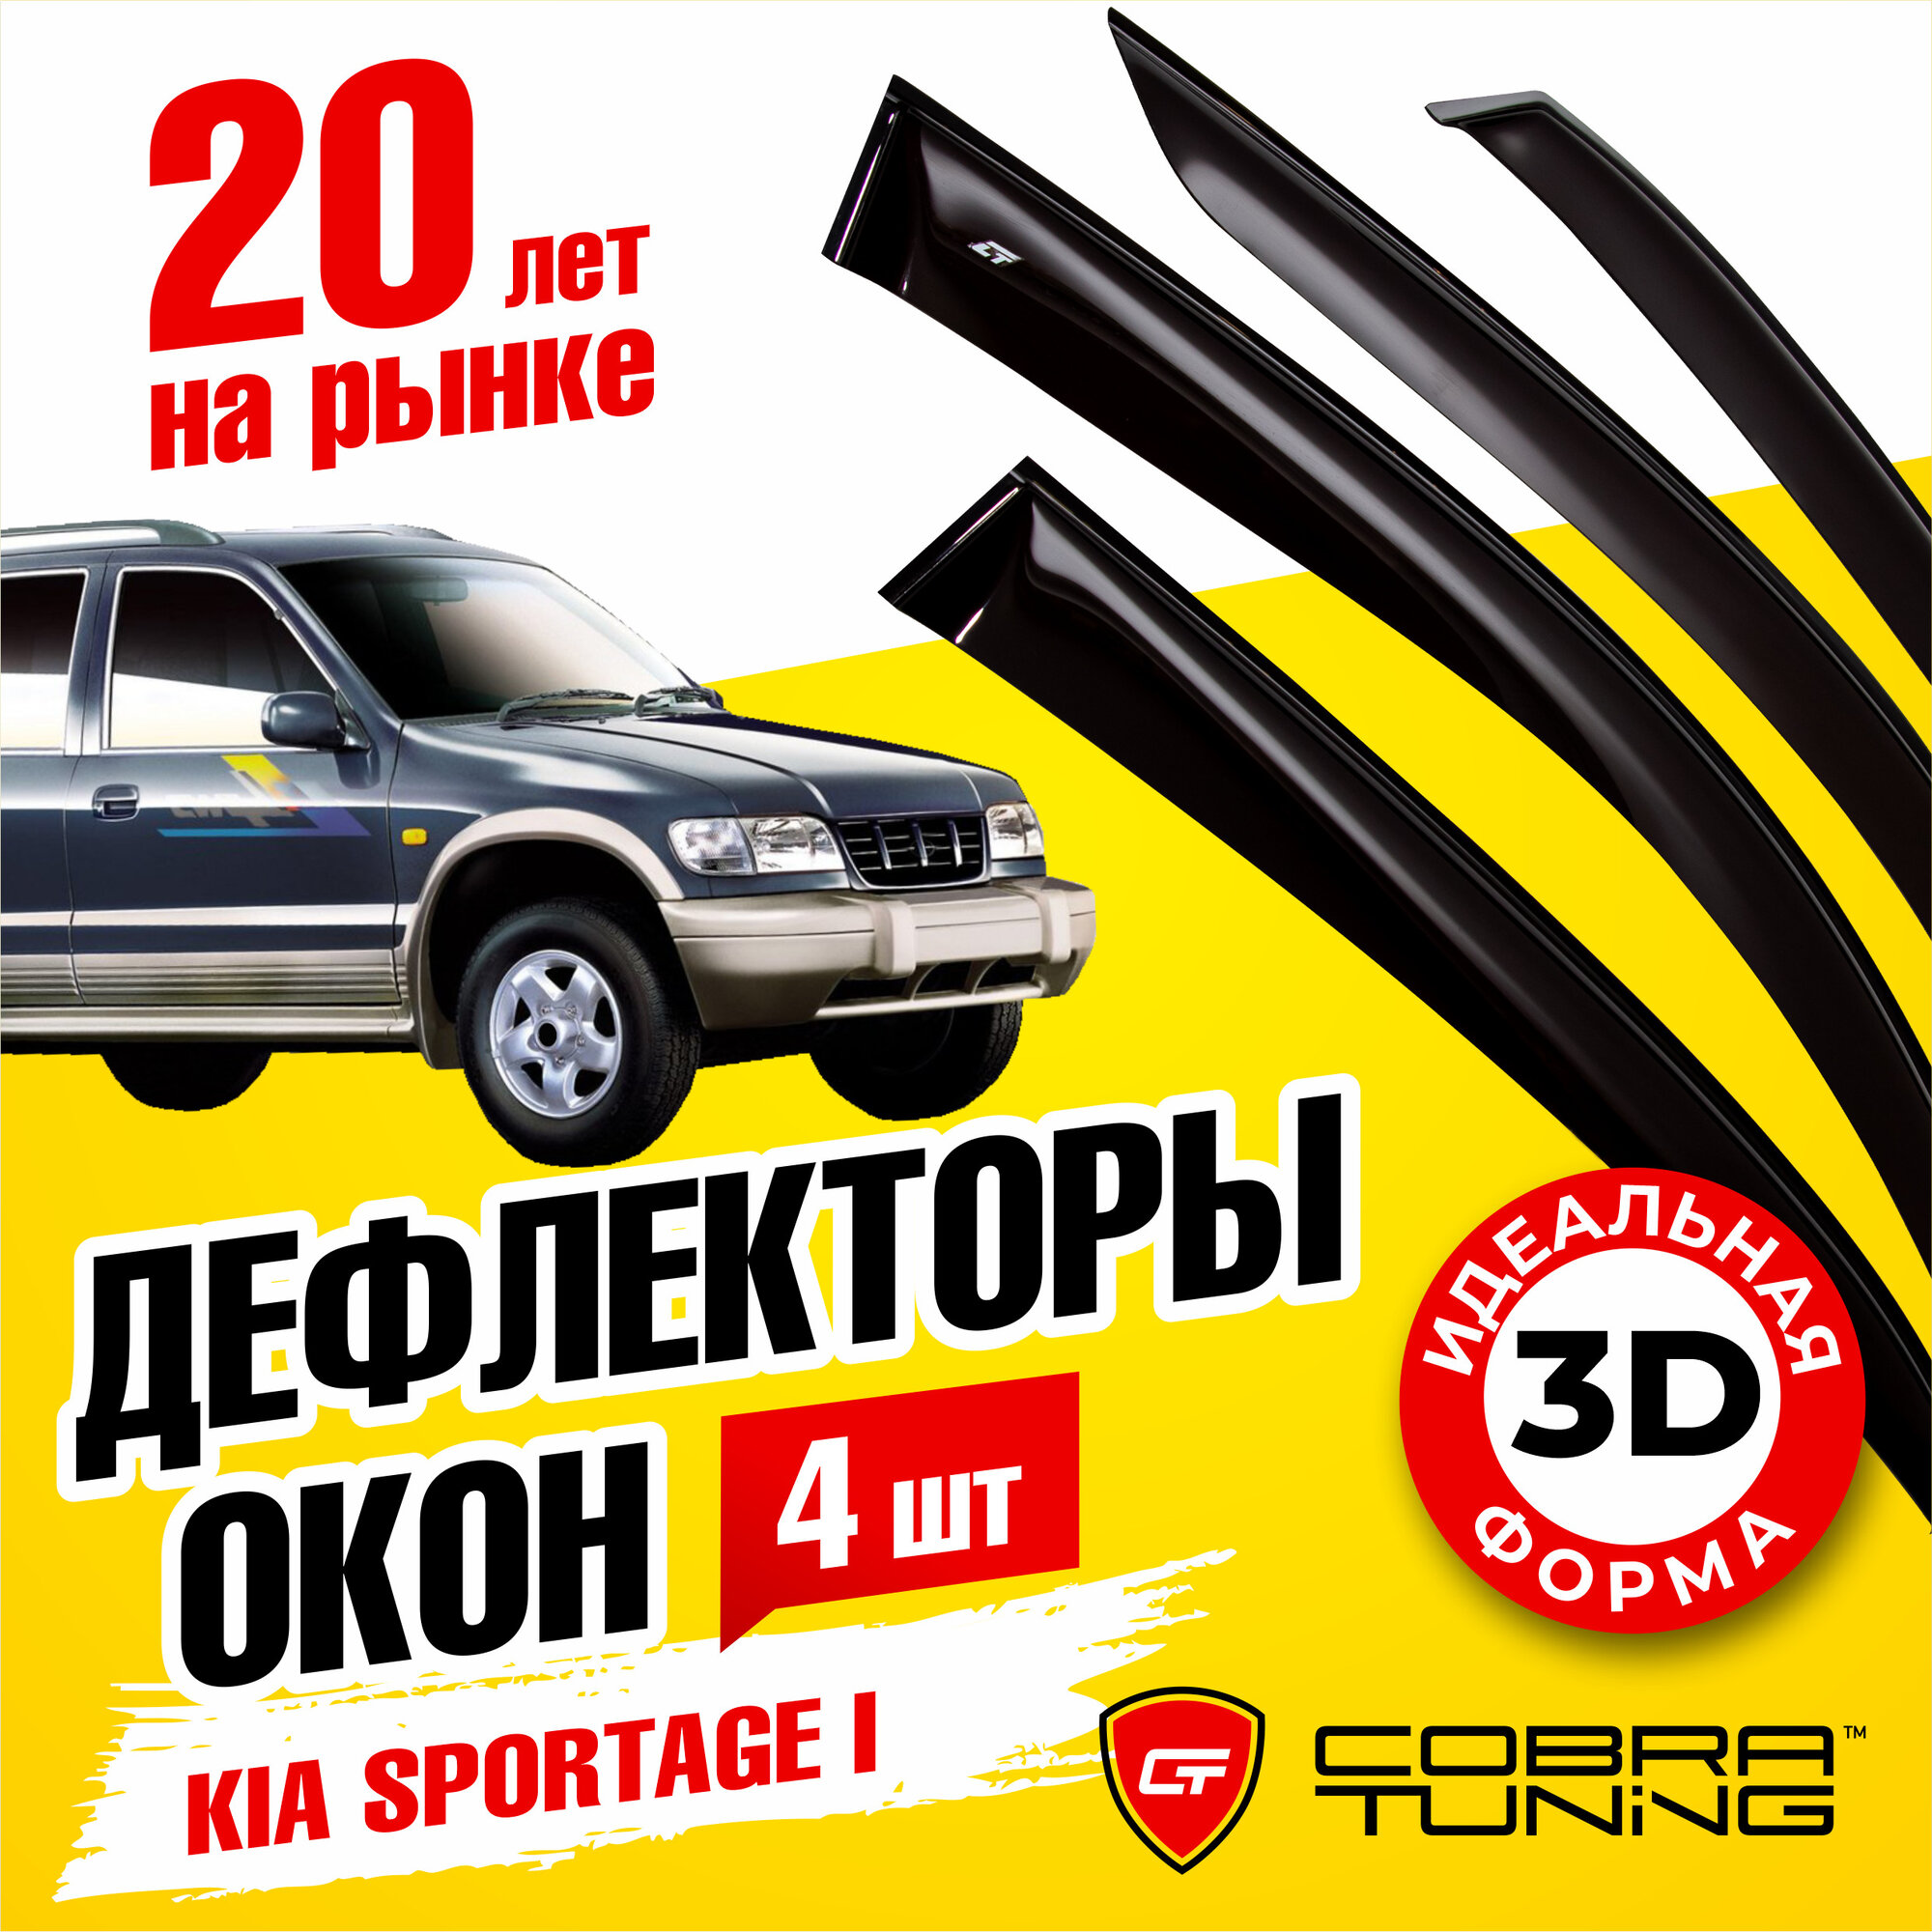 Дефлектор окон Cobra Tuning Дефлекторы окон Cobra Tuning для KIA SPORTAGE I 1993-2006 Калининград 1998-2008 ветровики на окна накладные K11794 для Kia Sportage